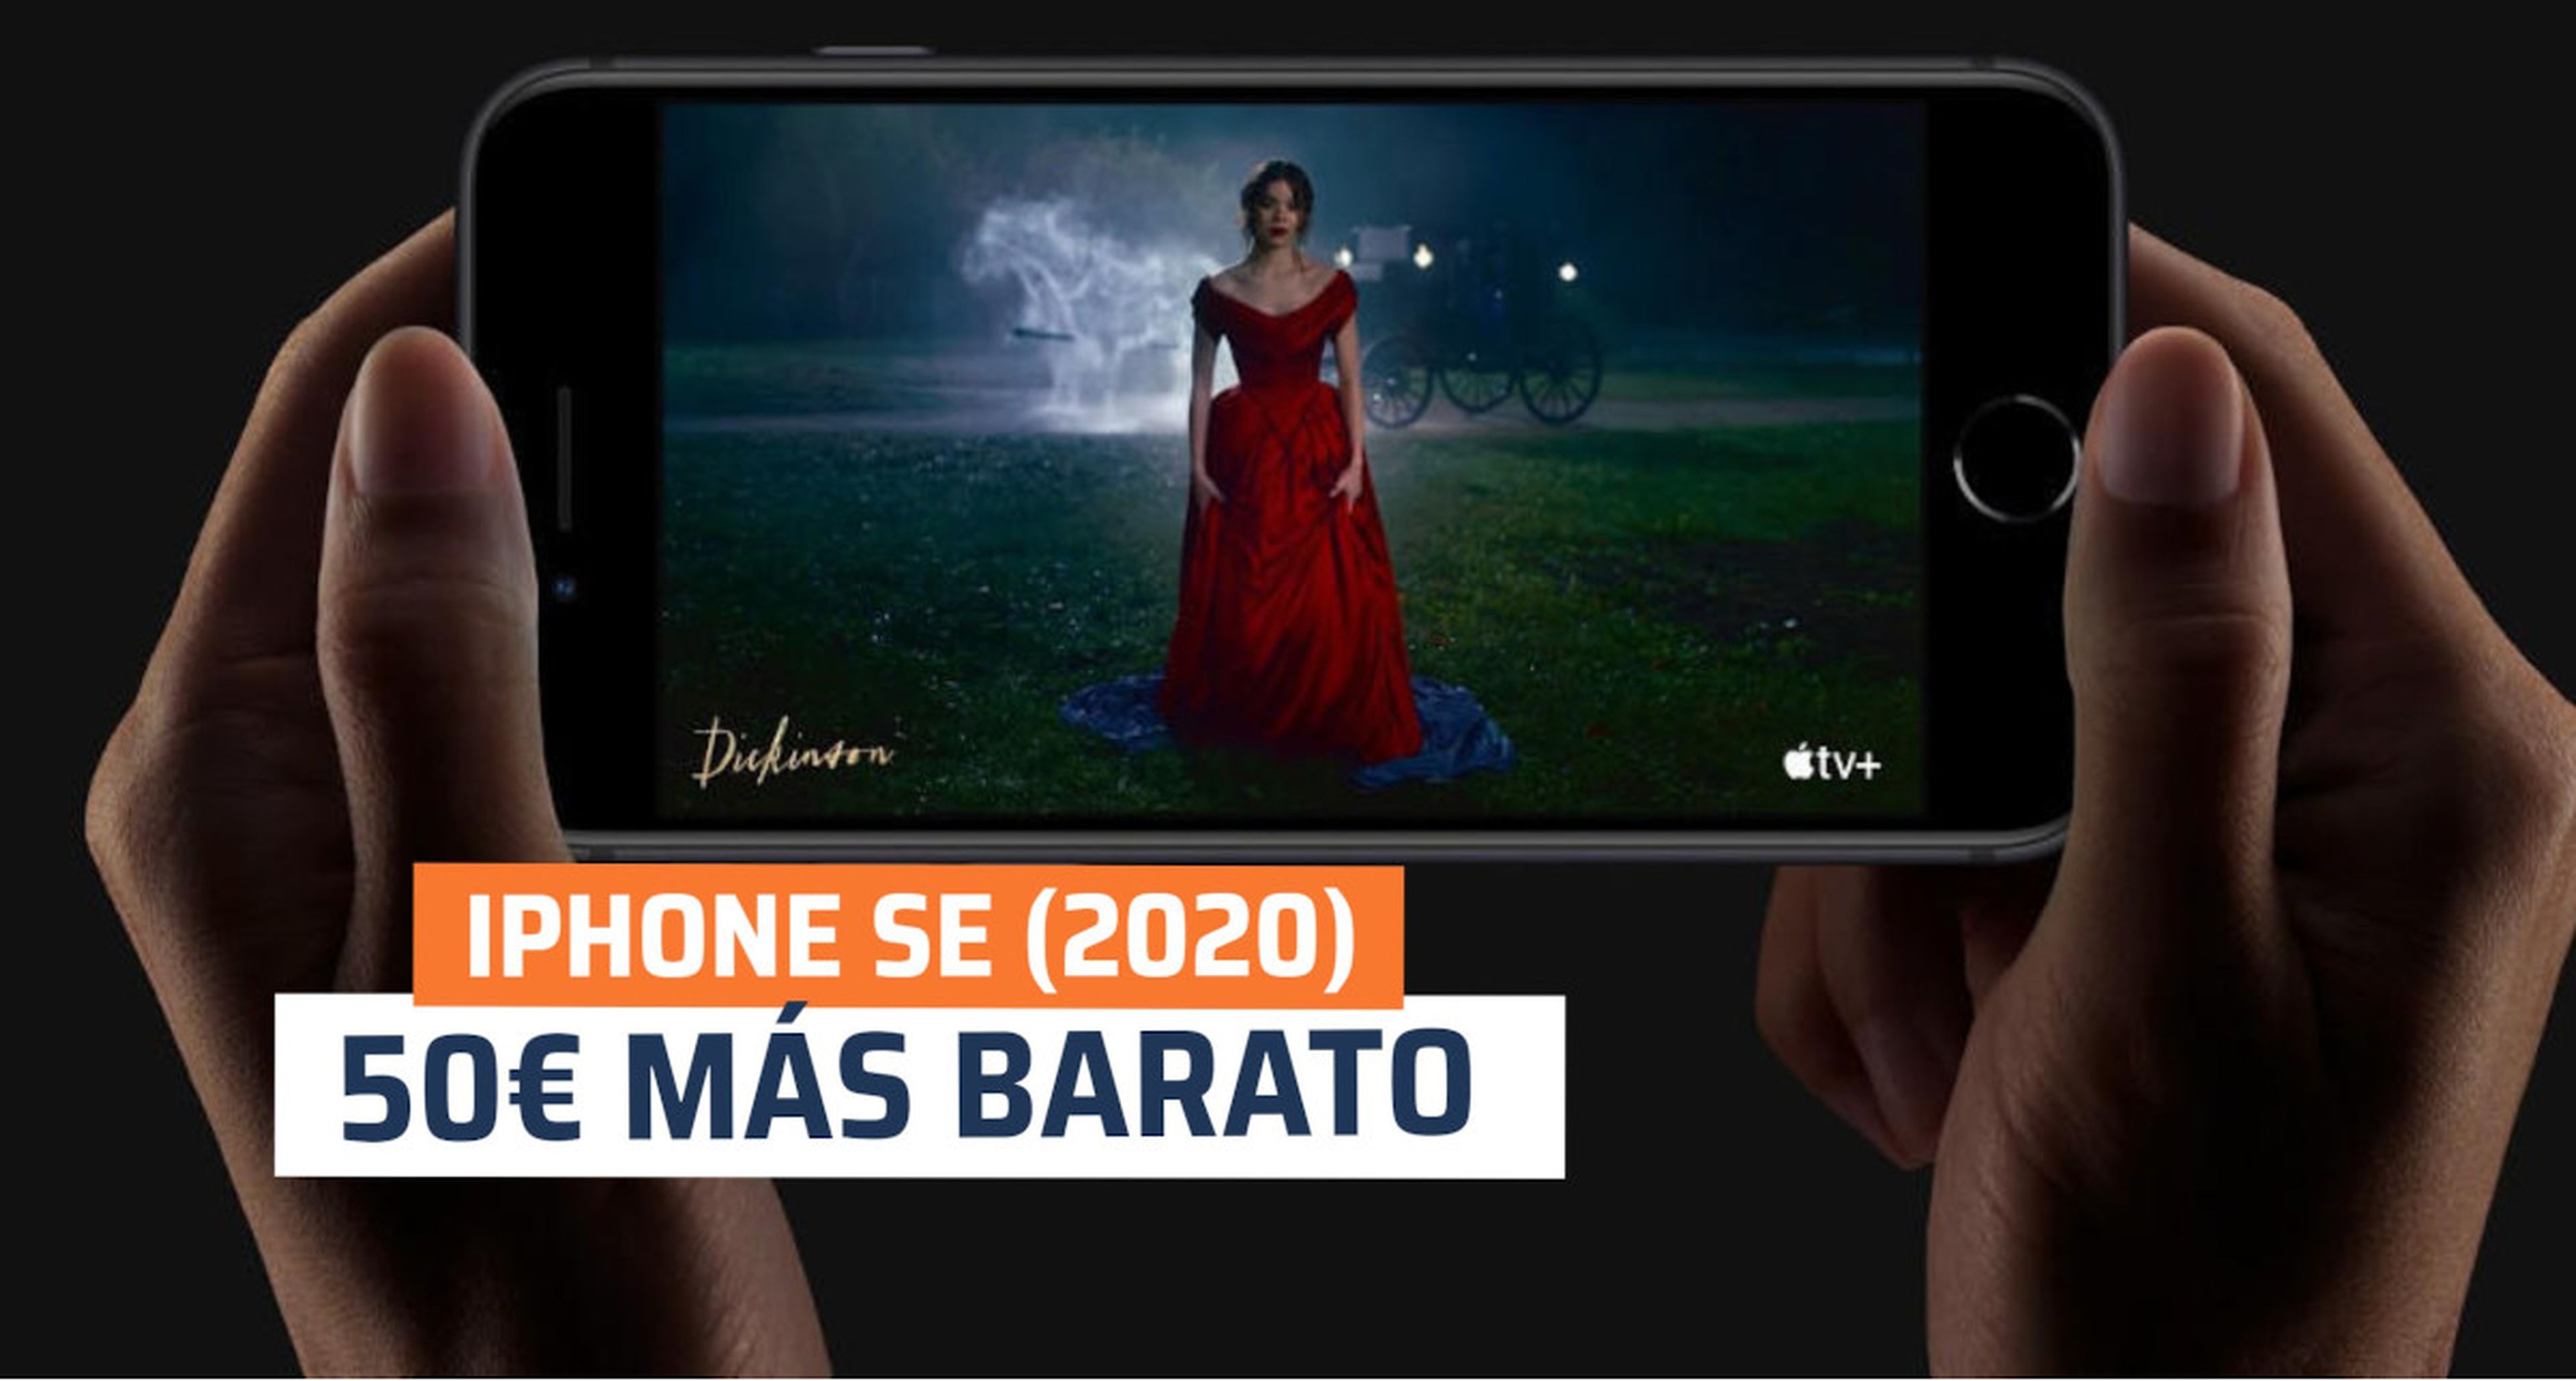 iPhone SE (2020) oferta